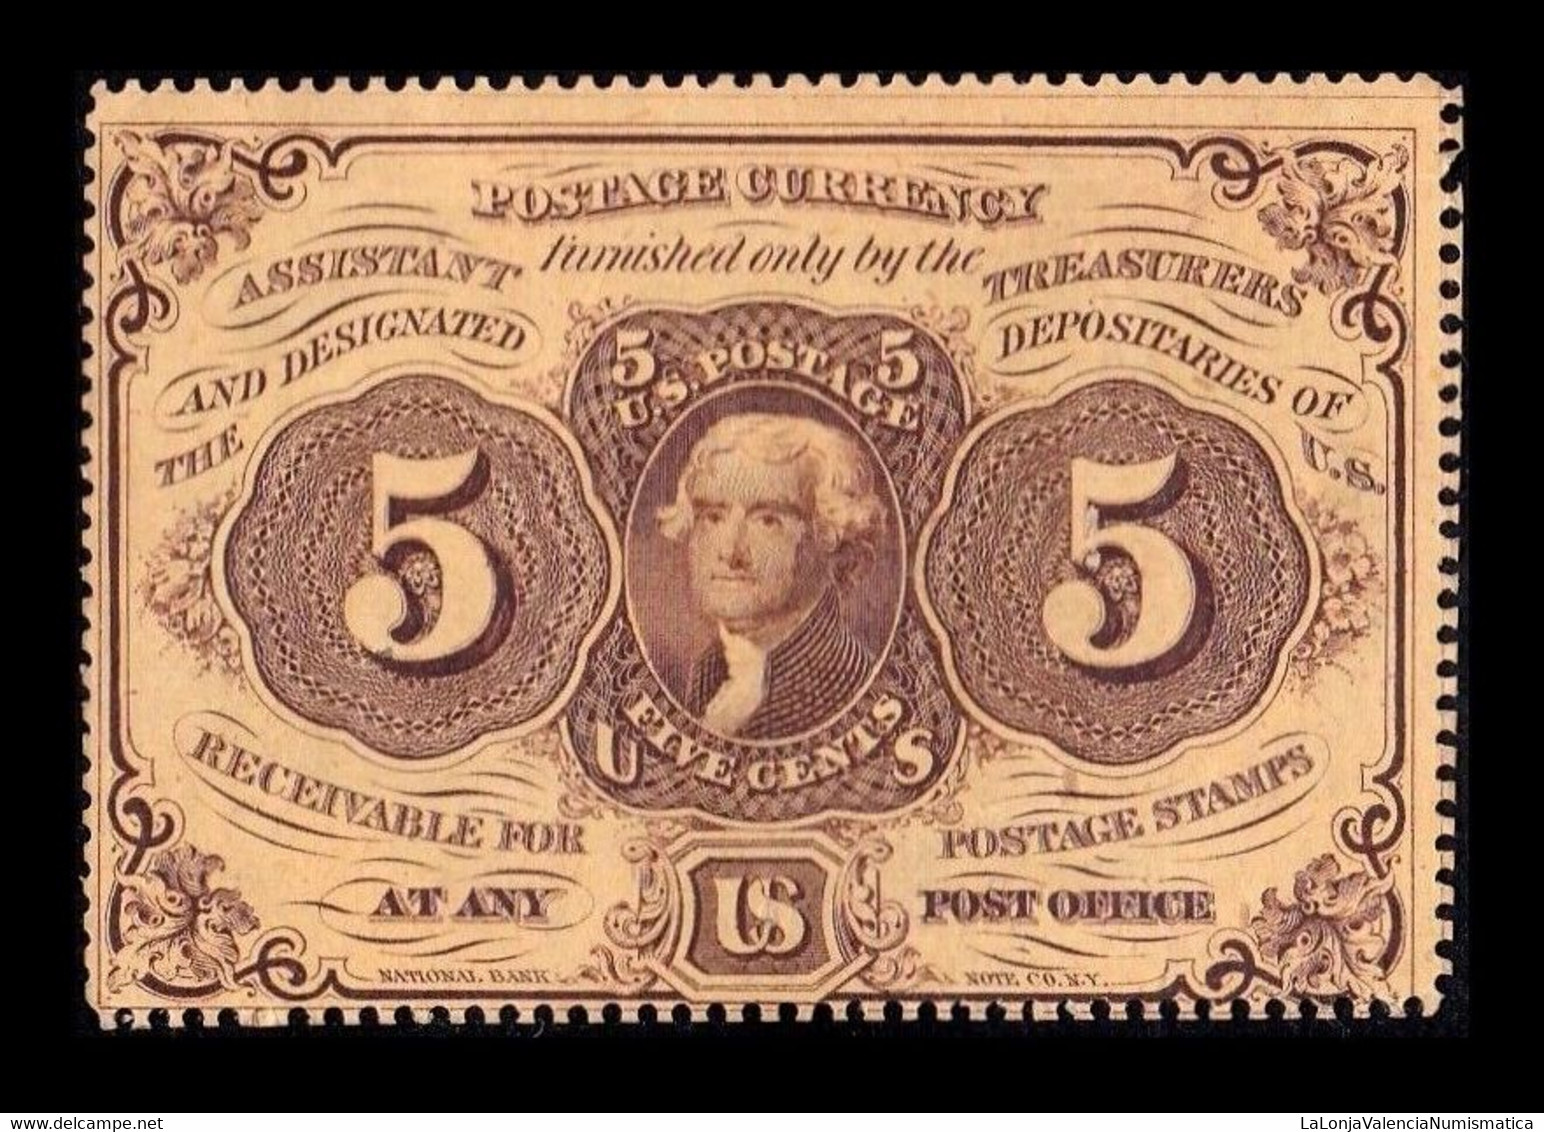 Estados Unidos United States 5 Cents George Washington 1862 Pick 97a EBC+ XF+ - 1862 : 1. Ausgabe